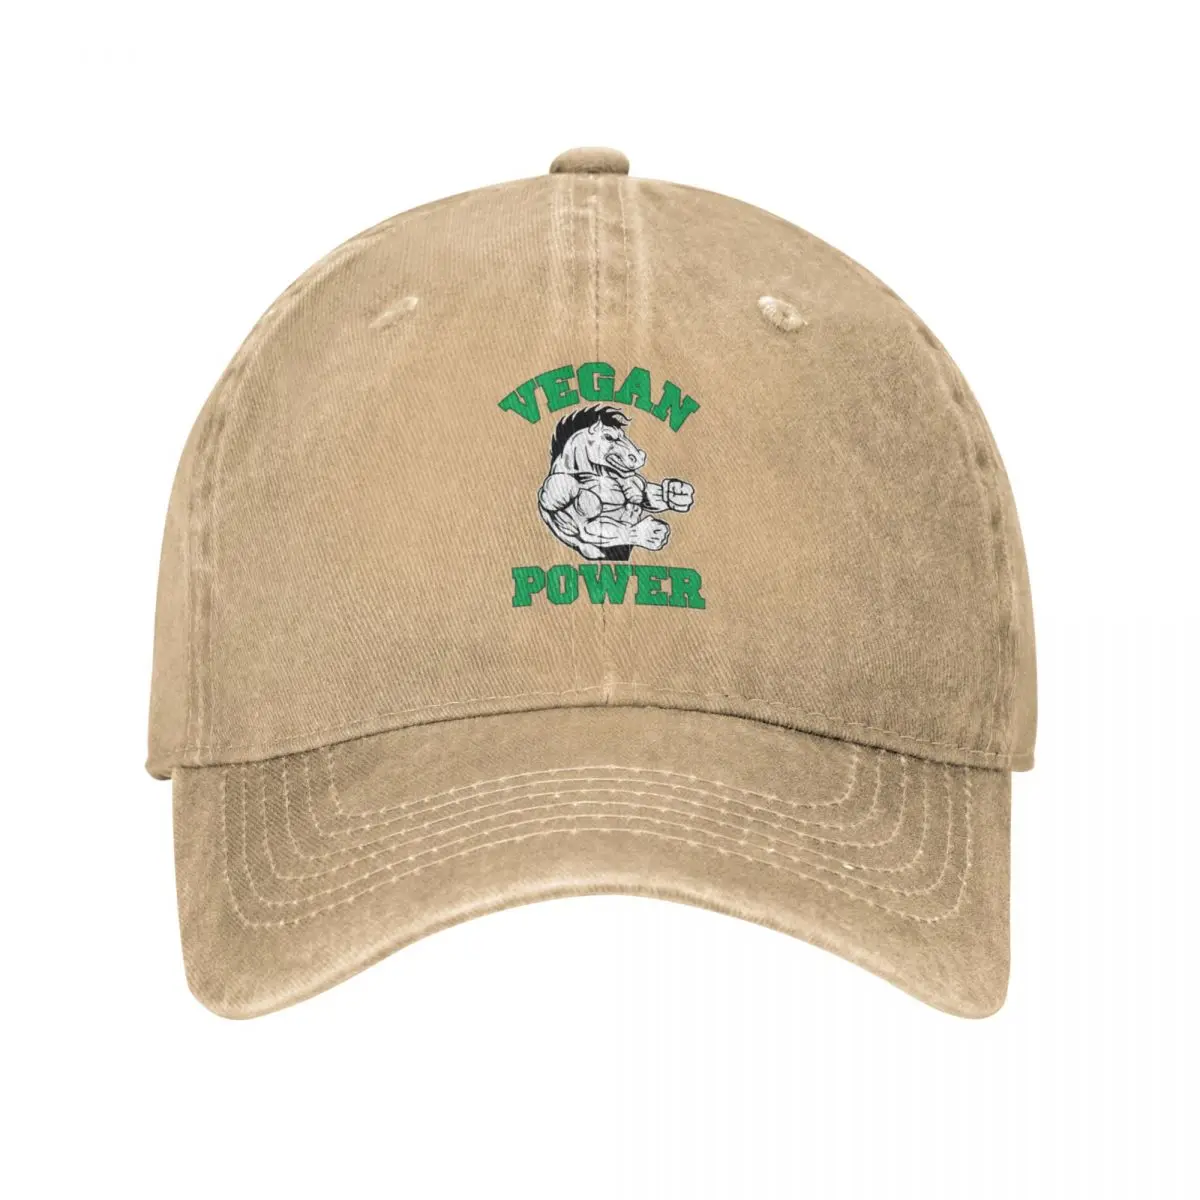 

Vegan Power Horse Vegan Lifestyle Cap Cowboy Hat Cap hat sun hat men's cap Women's